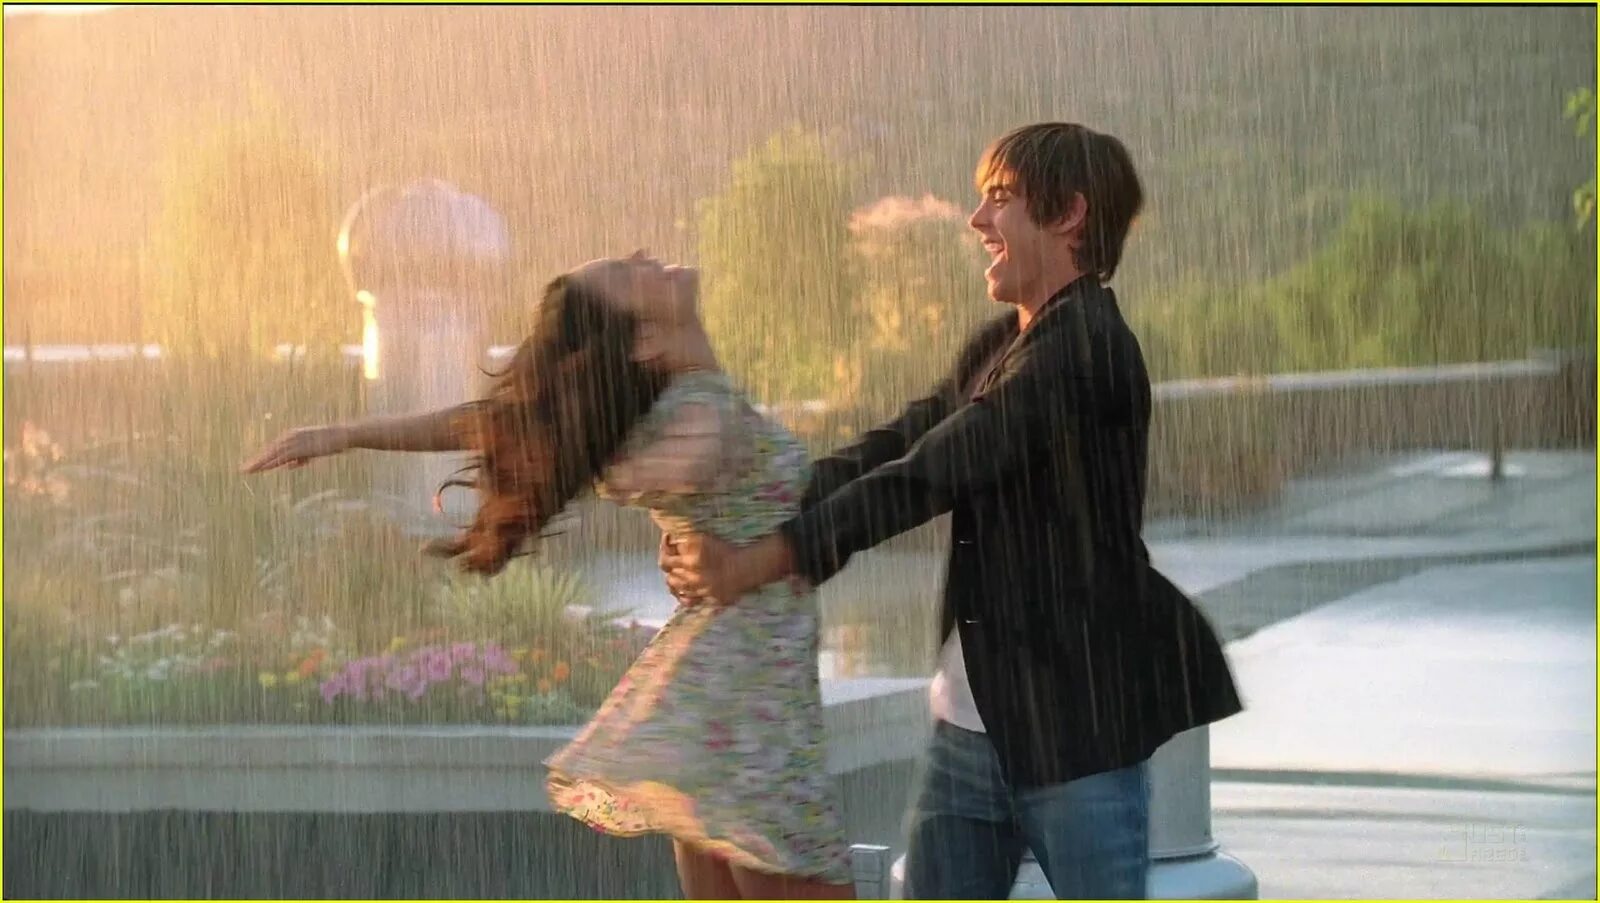 Температура песня три дня дождя полна любви. Вивиан Грин танцевать под дождём. Влюблённые под дождём. Прогулка вдвоем под дождем. Пара танцует под дождем.